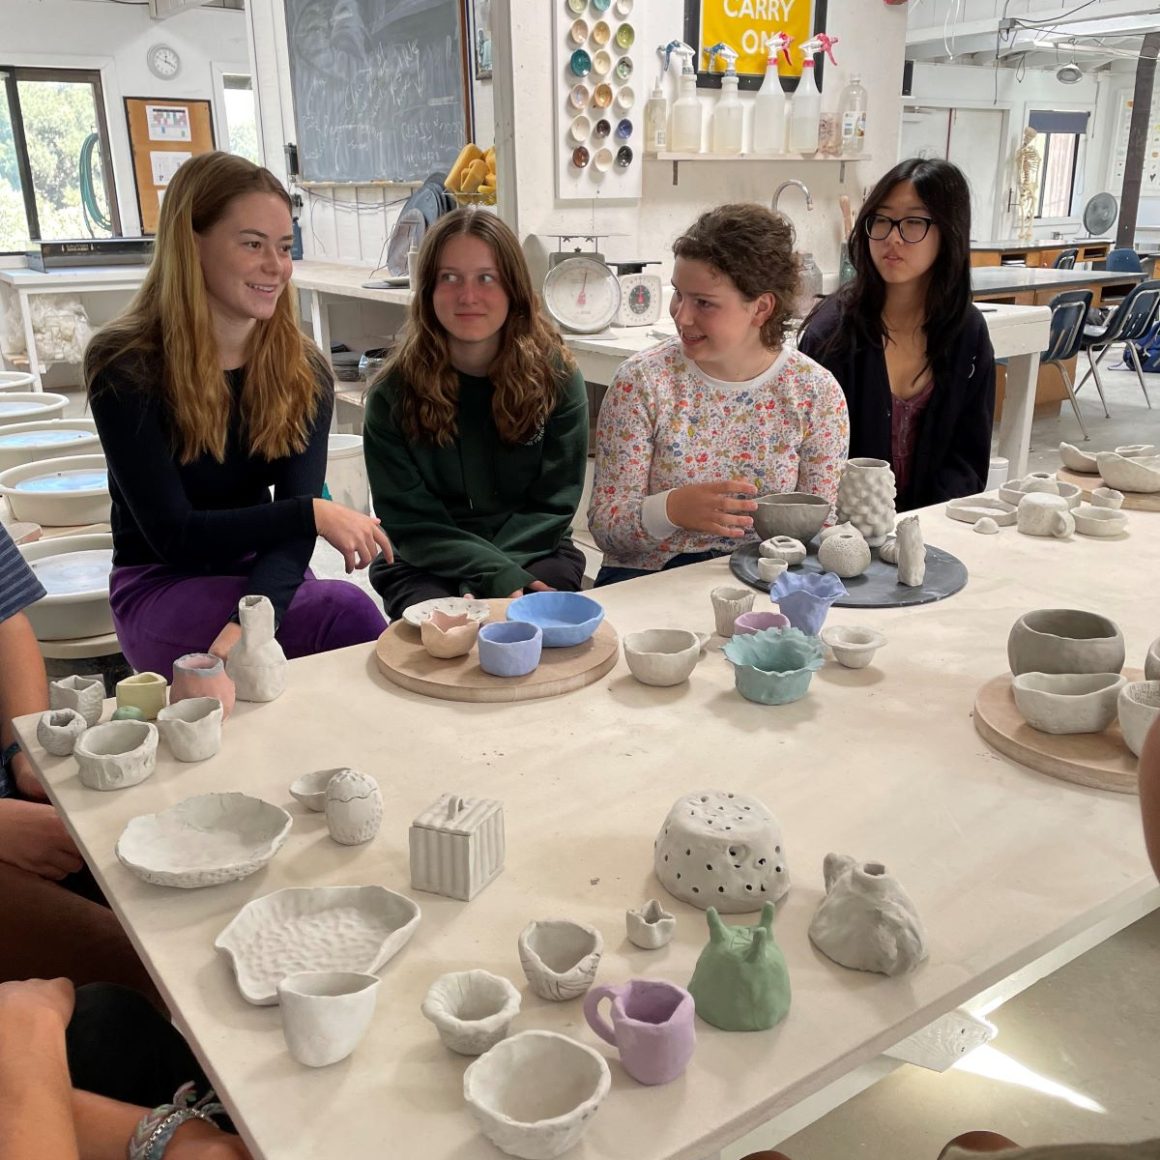 Midland students share their ceramics work